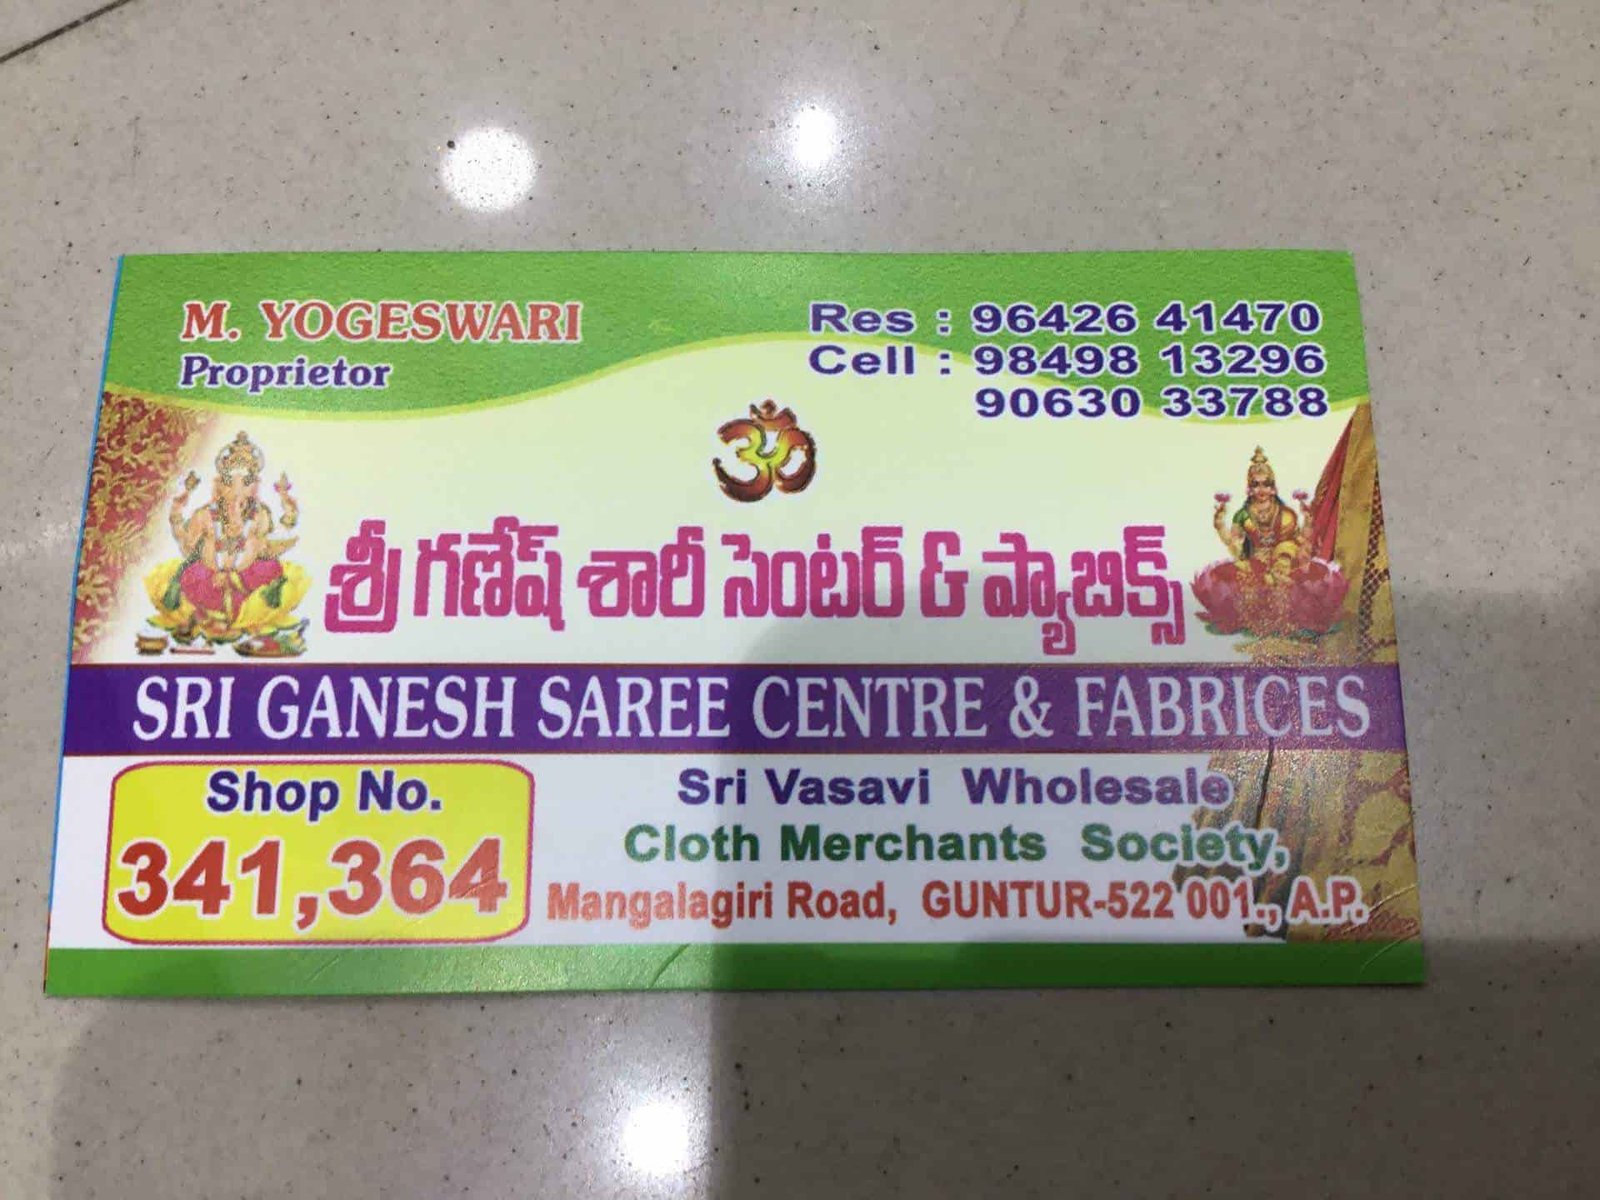 Sri Ganesh Saree Centre & Fabrics